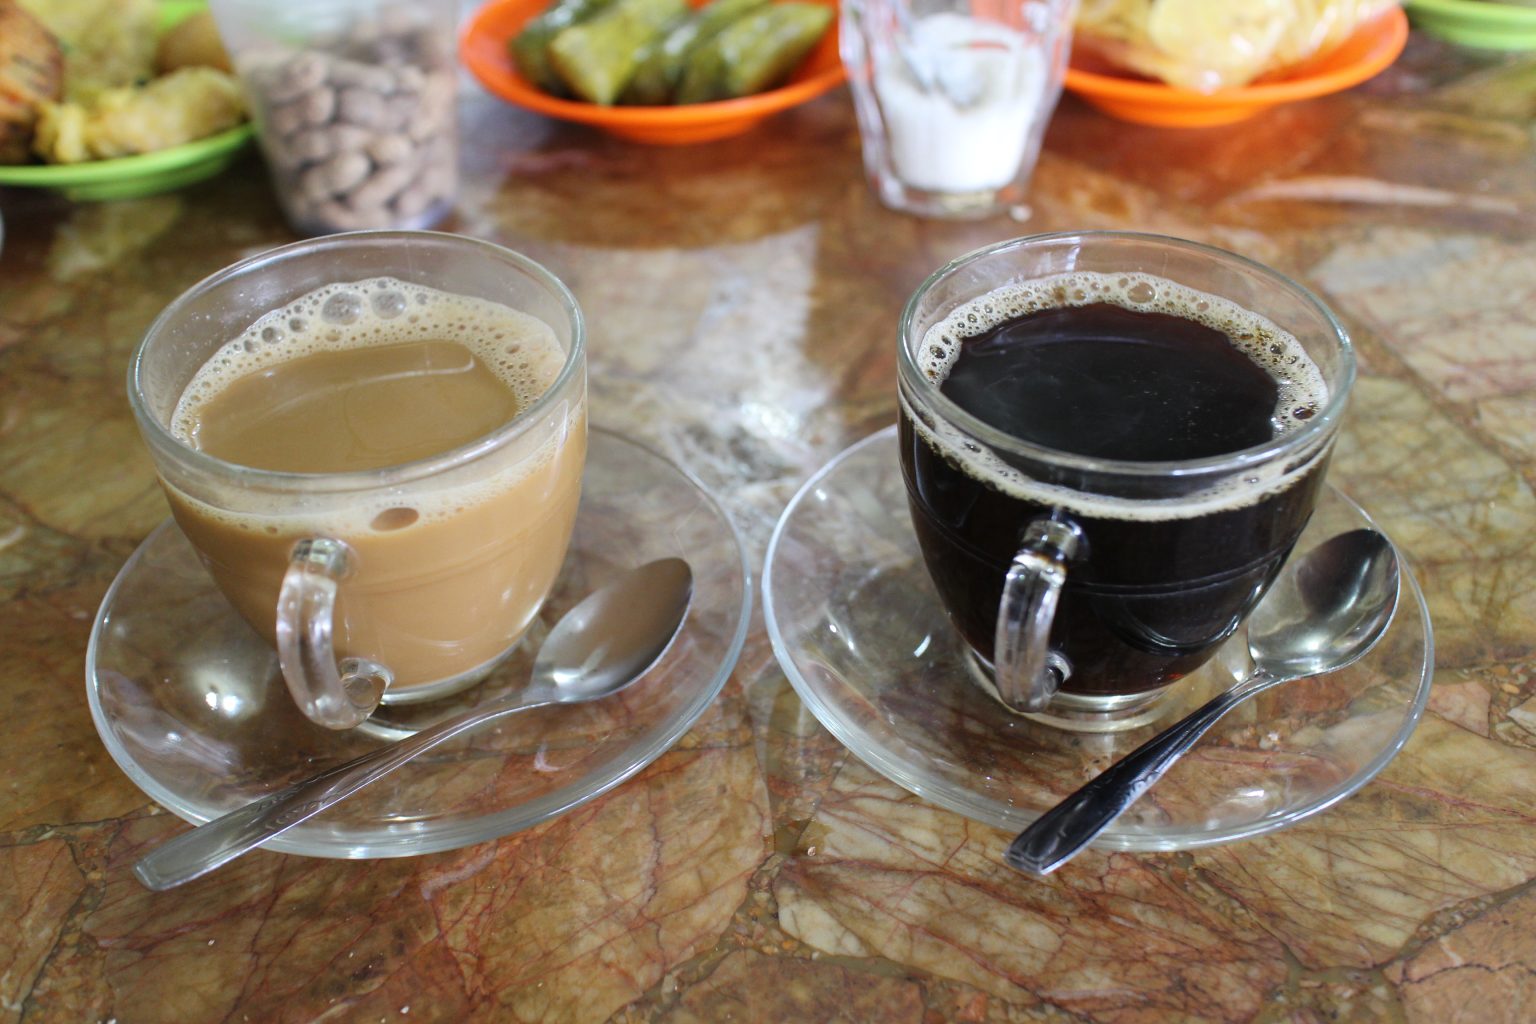 Warung Kopi MAKWIN - Coffee Shop Recommend!